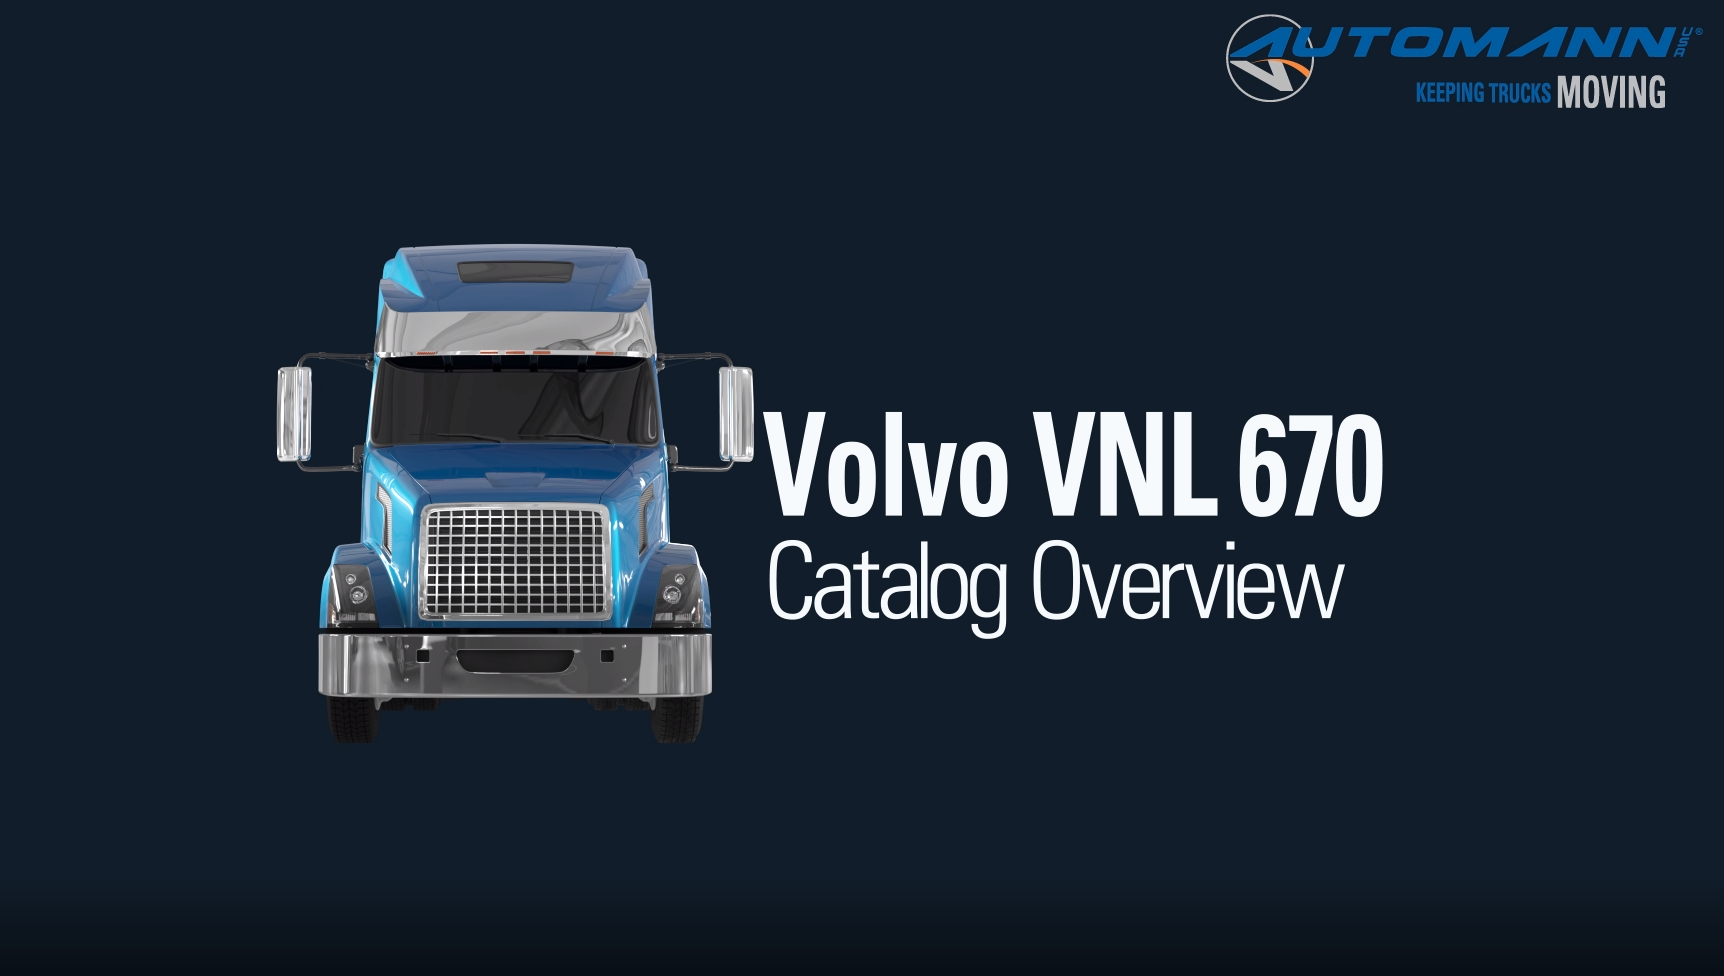 Volvo VNL 670 Catalog Overview